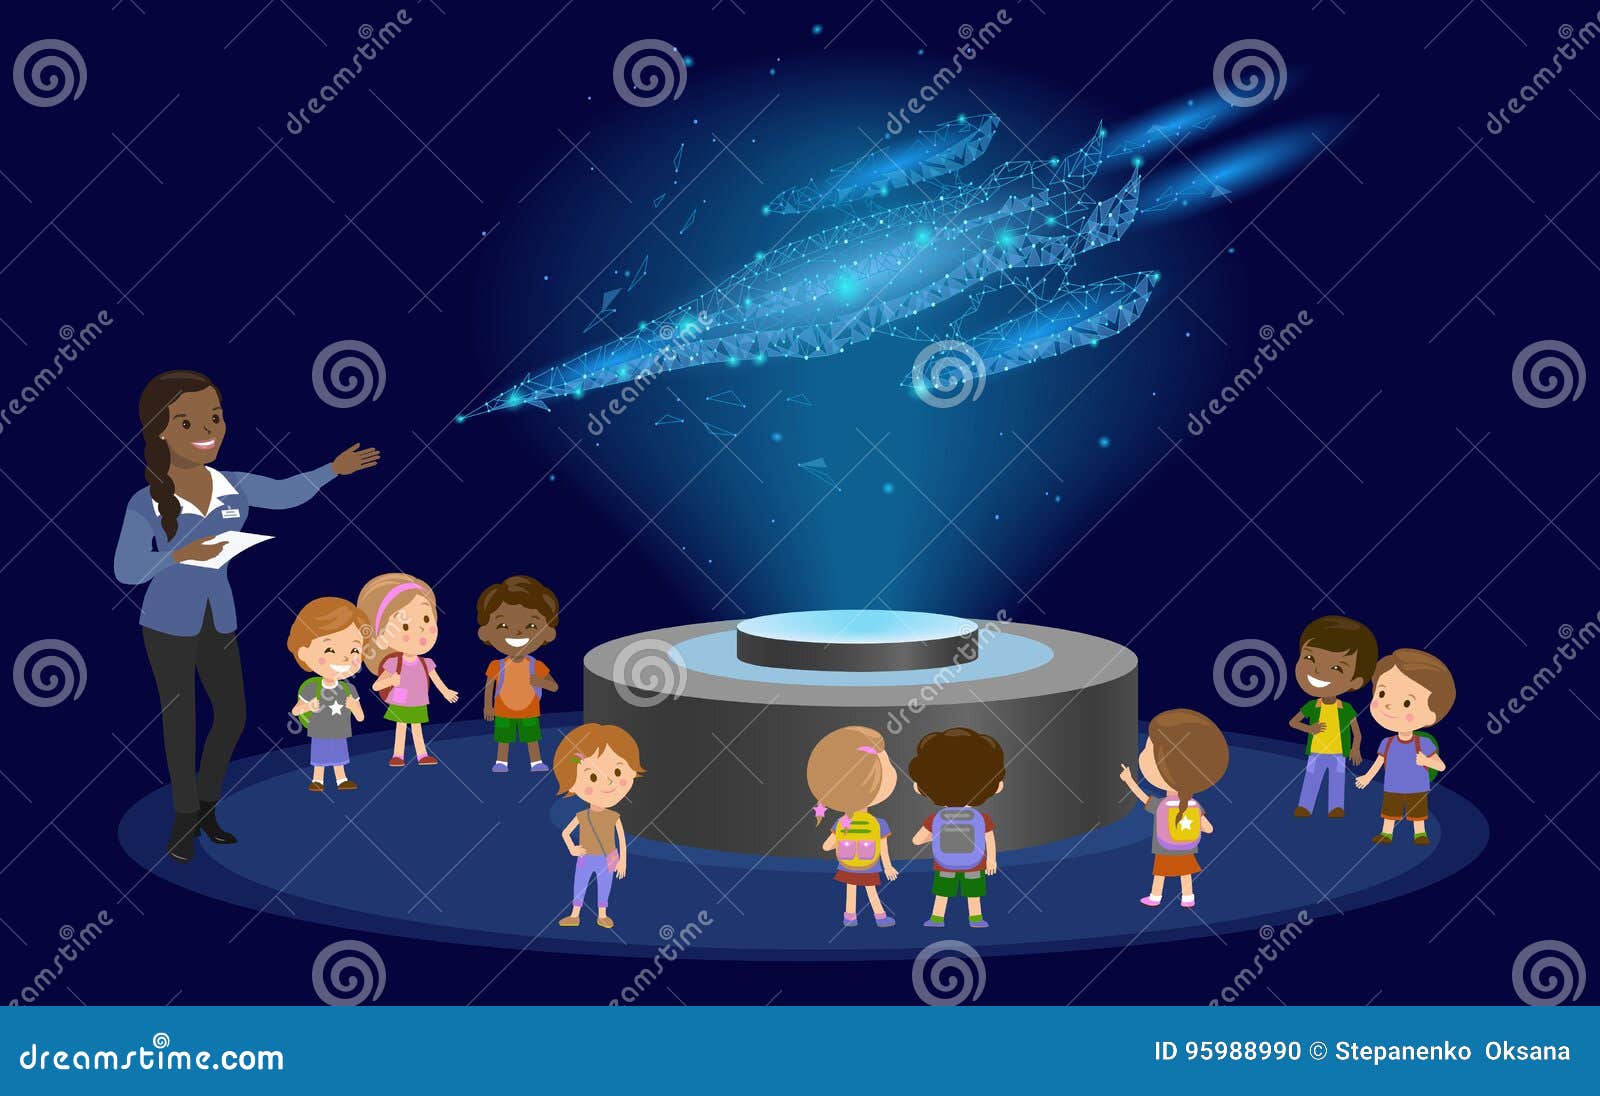 innovation education ary school african brown skin black hair group of kids planetarium science spaceship hologram on space